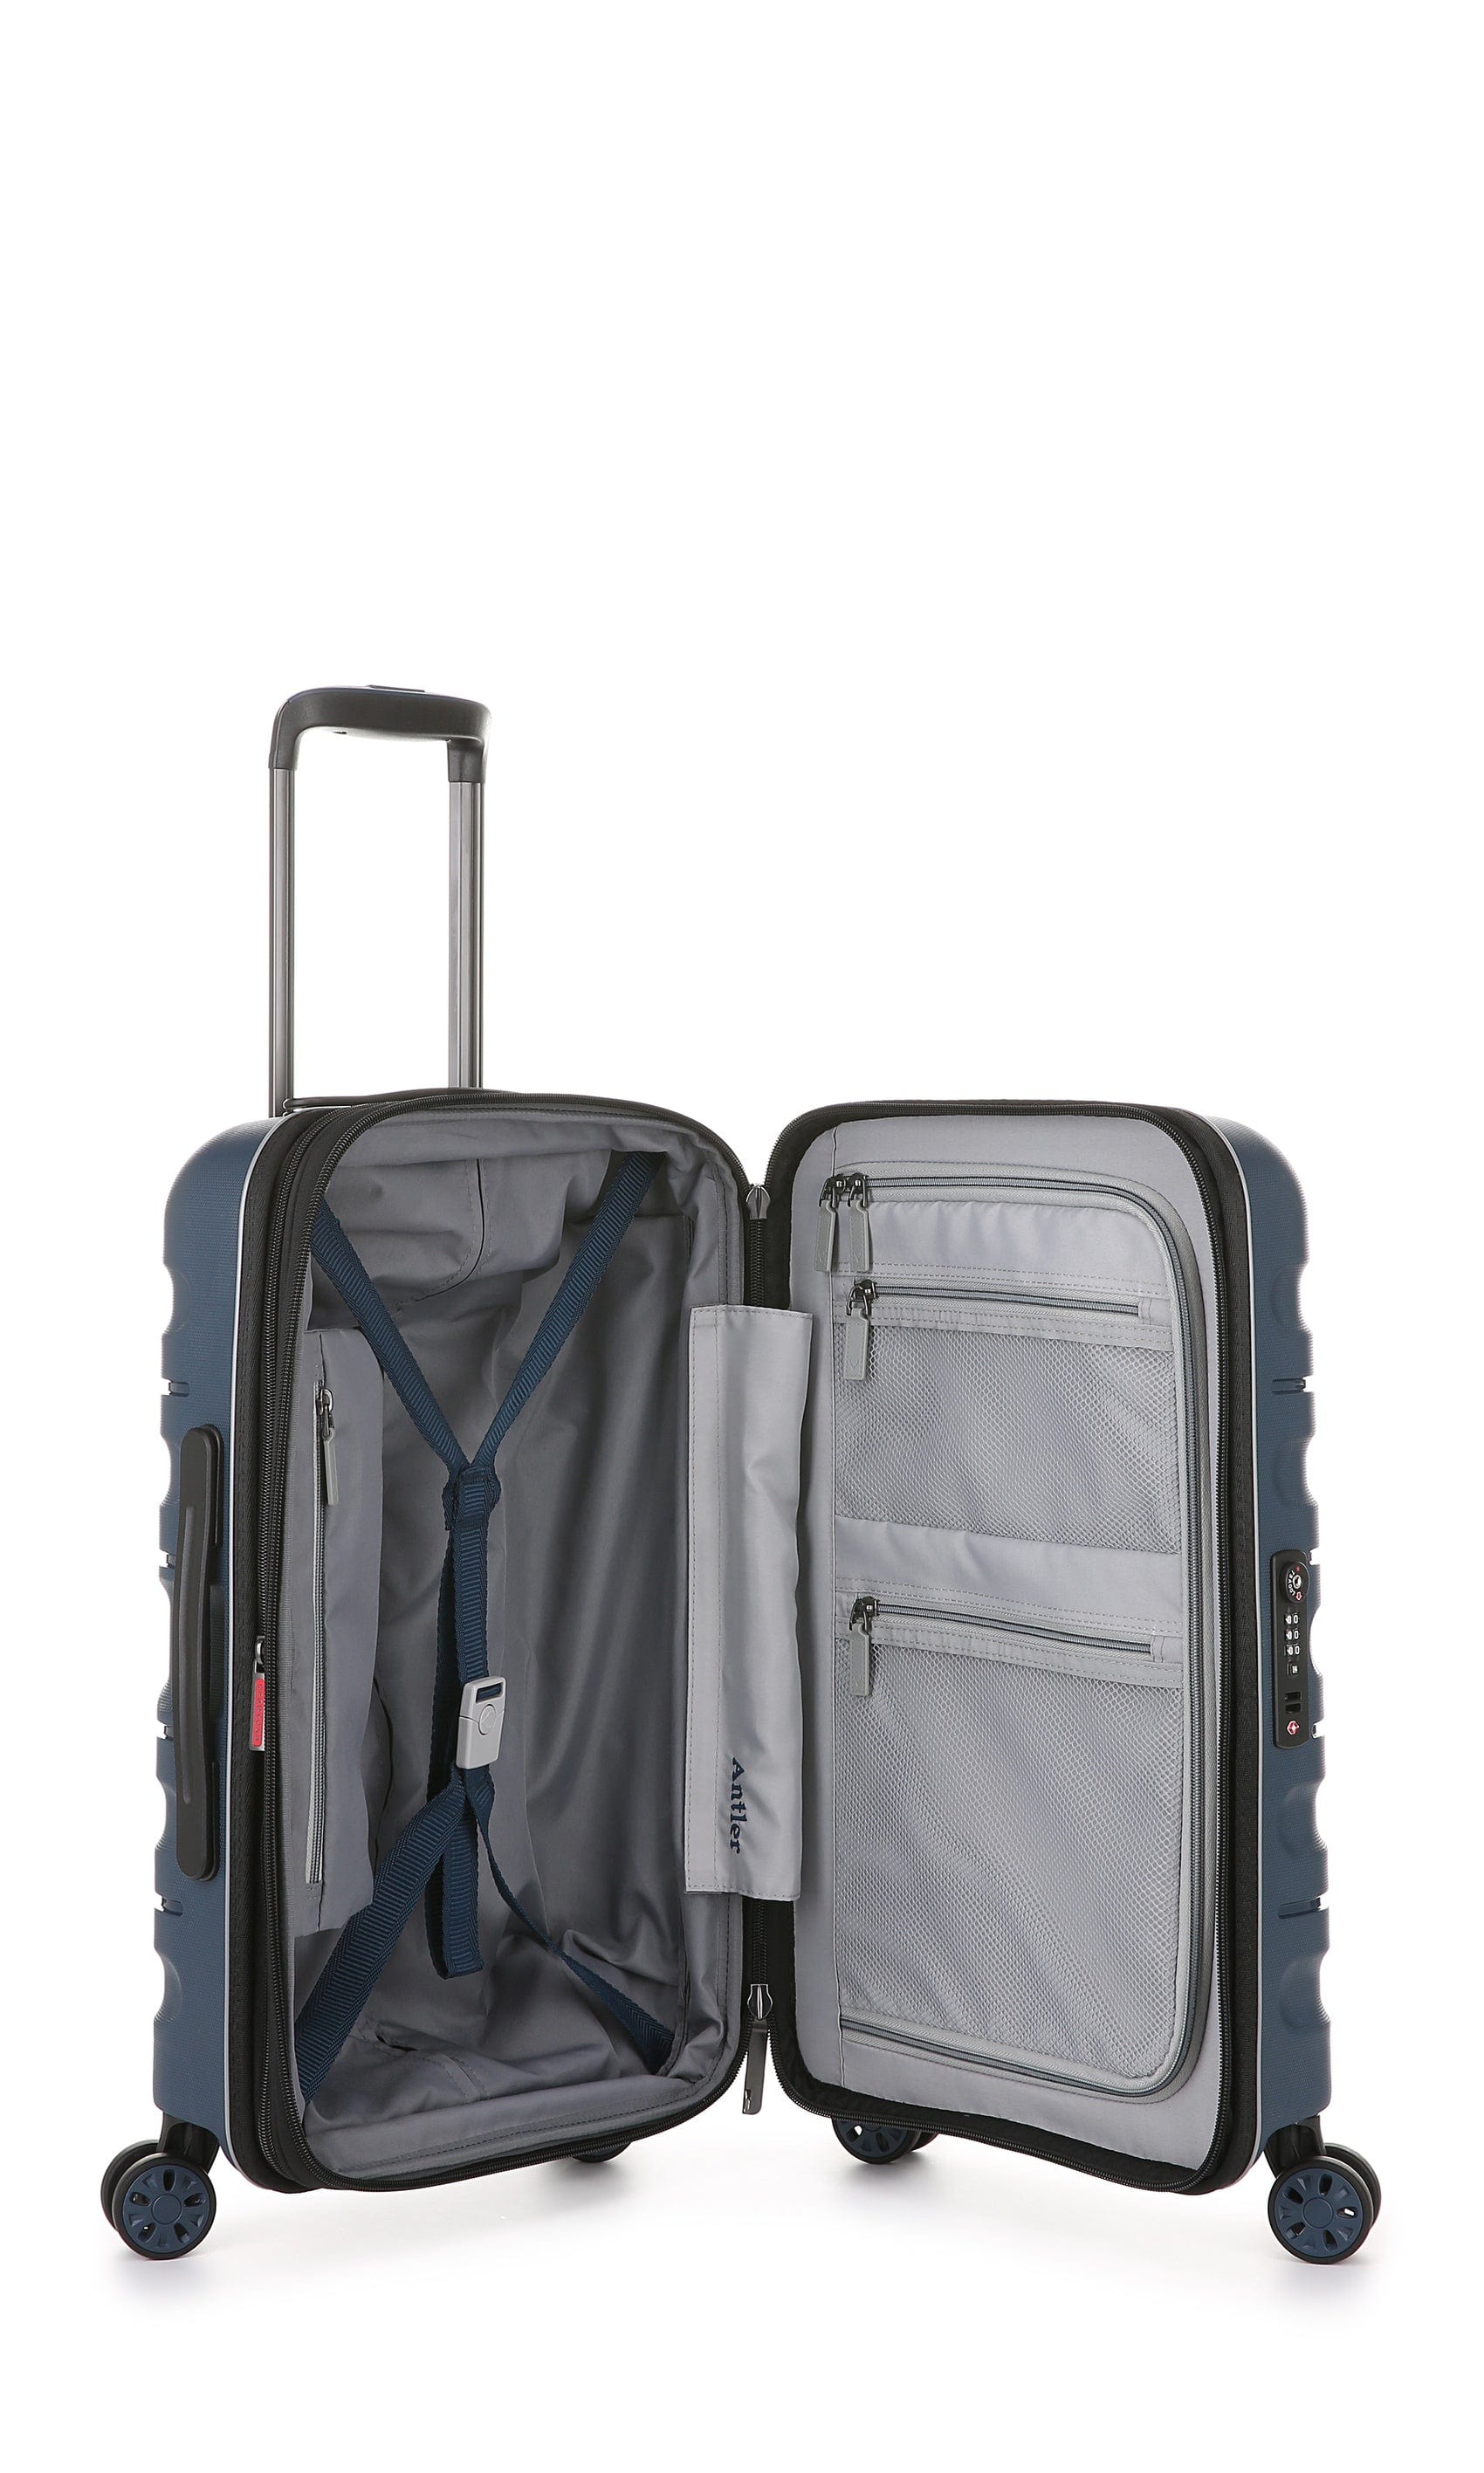 Antler Luggage -  Lincoln cabin in navy - Hard Suitcase Lincoln Cabin Suitcase Navy | Hard Suitcase | Antler UK